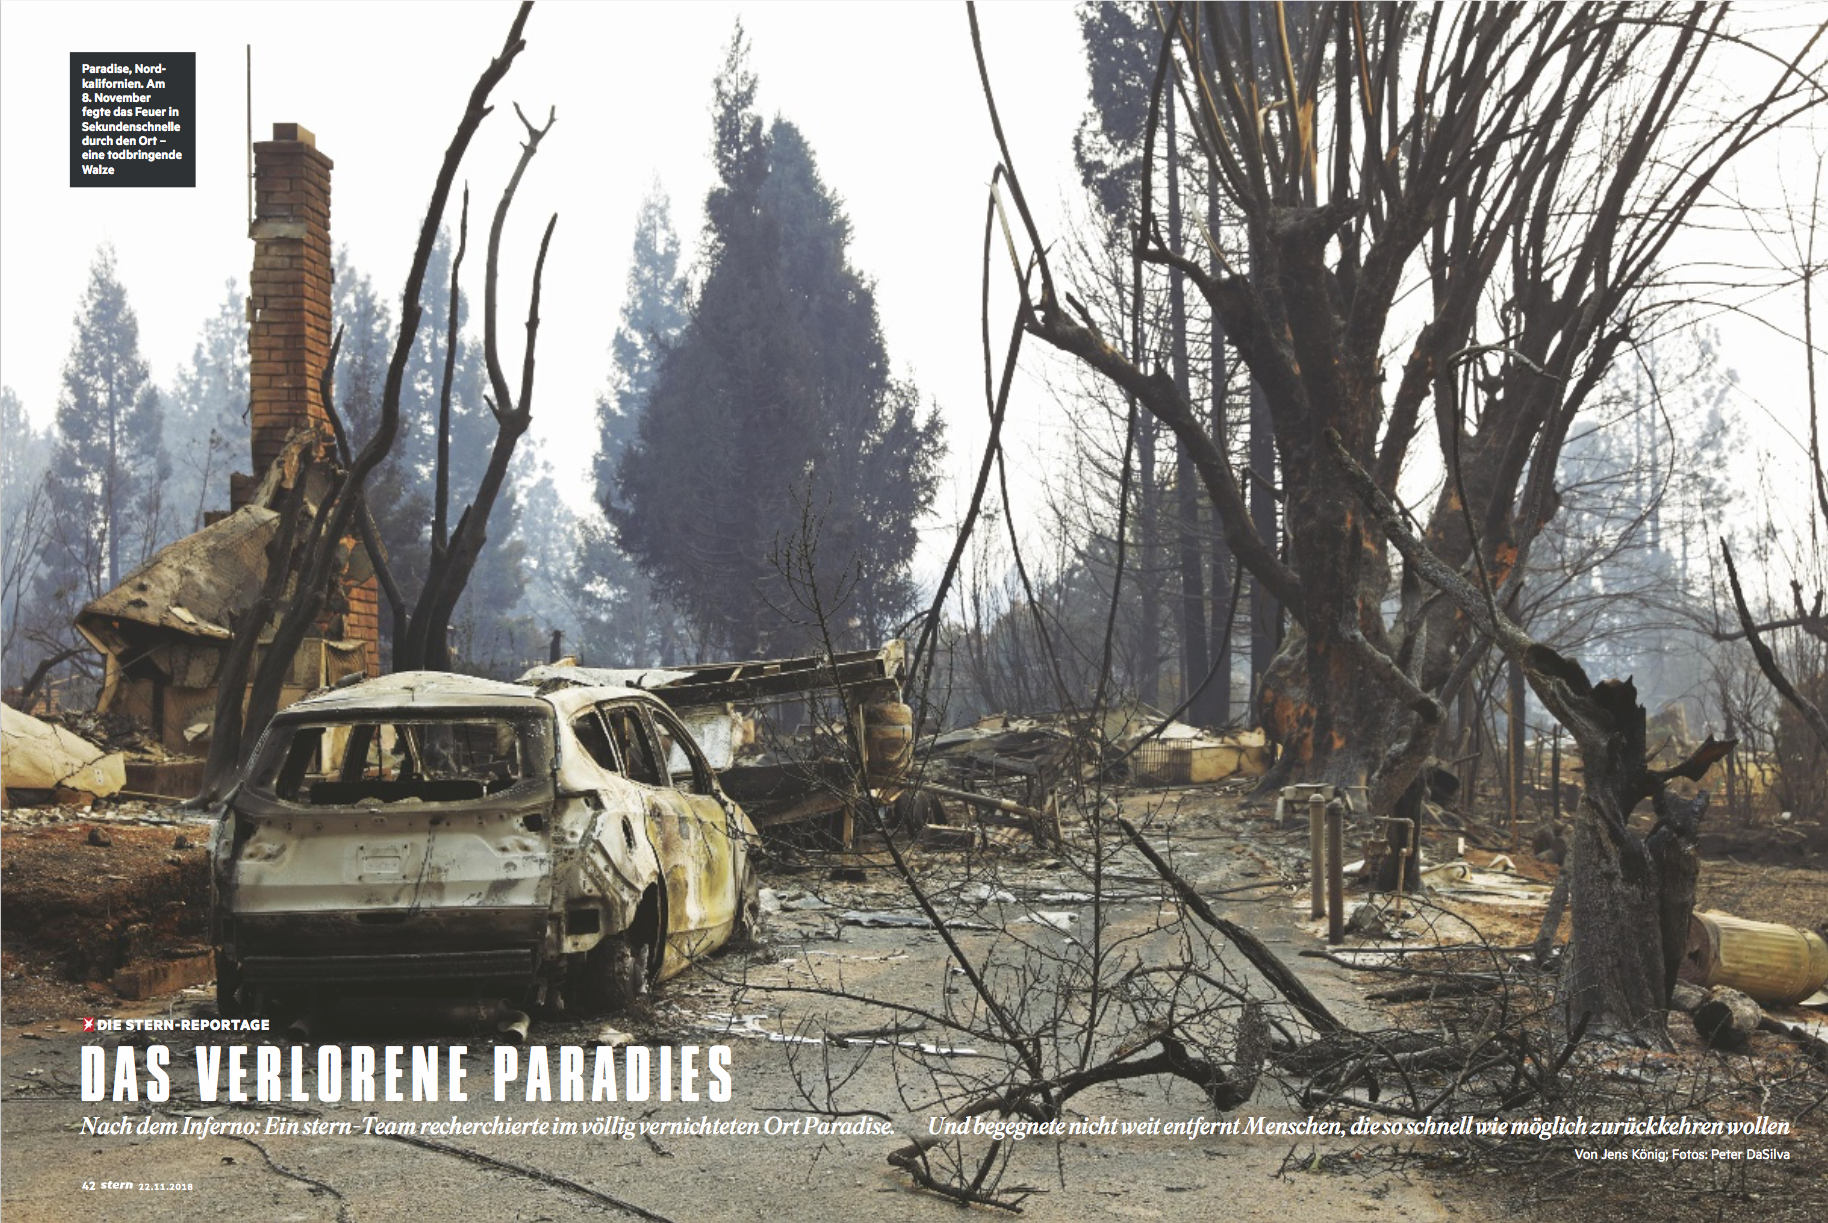   Camp Fire-Paradise, CA - Stern Magazine -double truck spread  